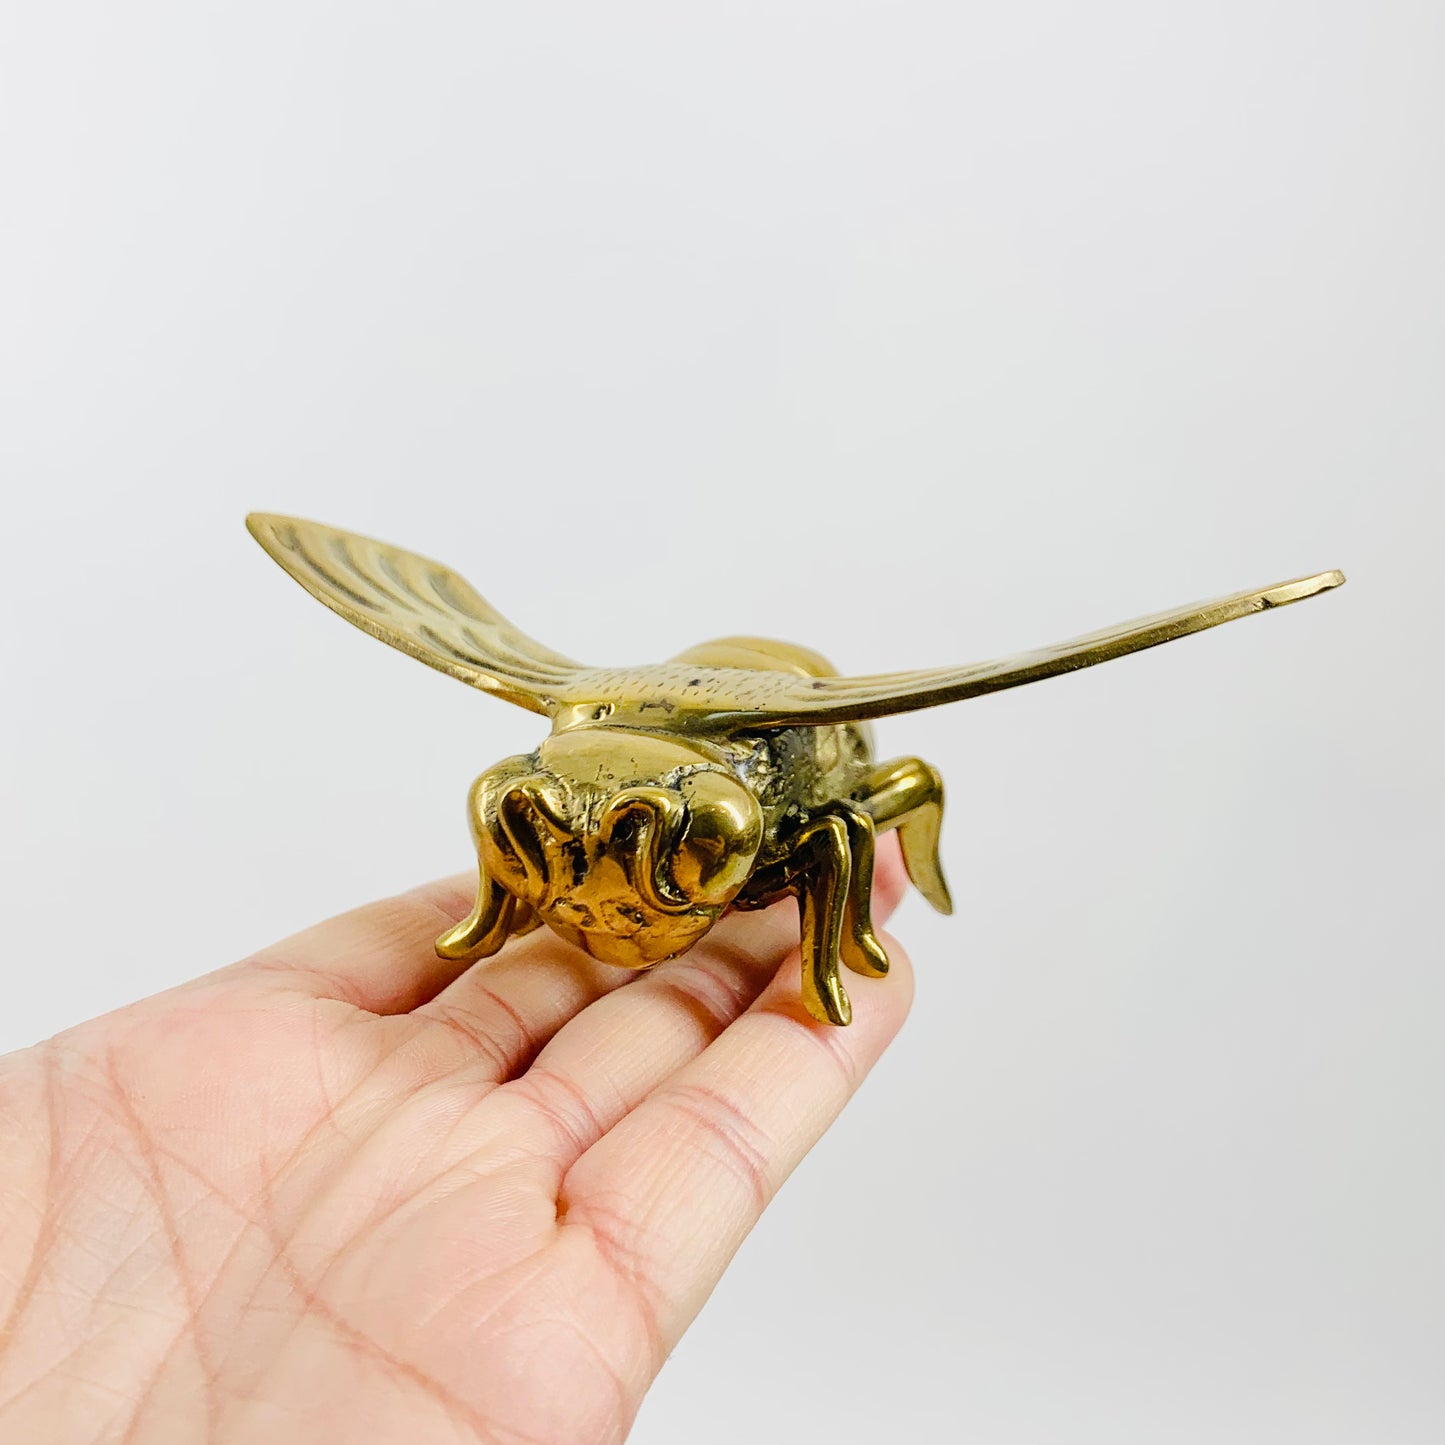 Antique brass bee